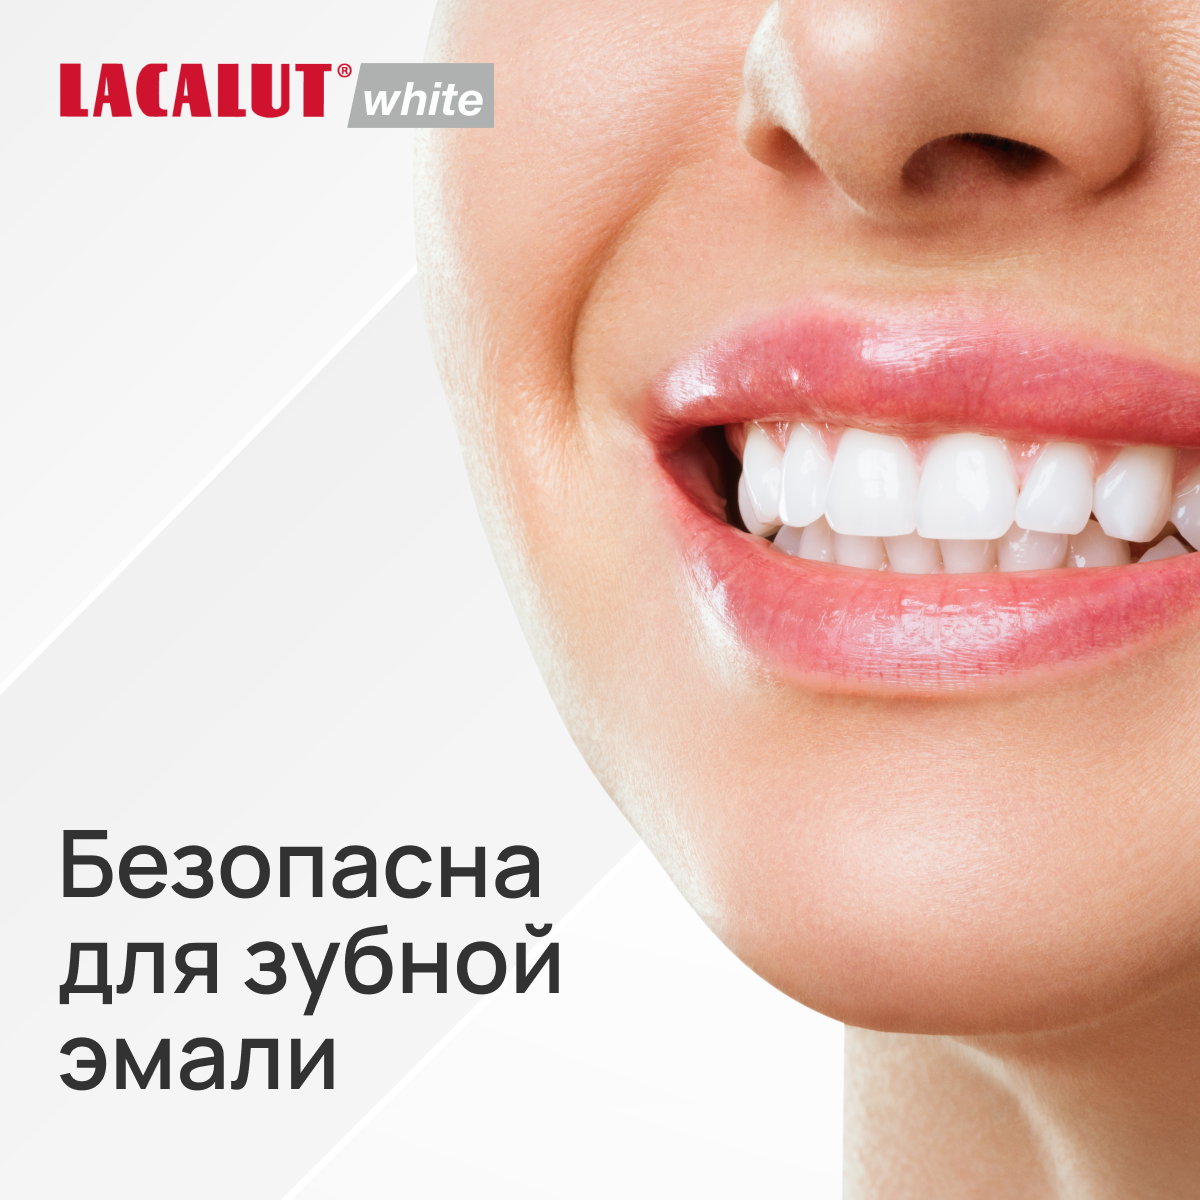 Lacalut white, профилактическая зубная паста, 75 мл